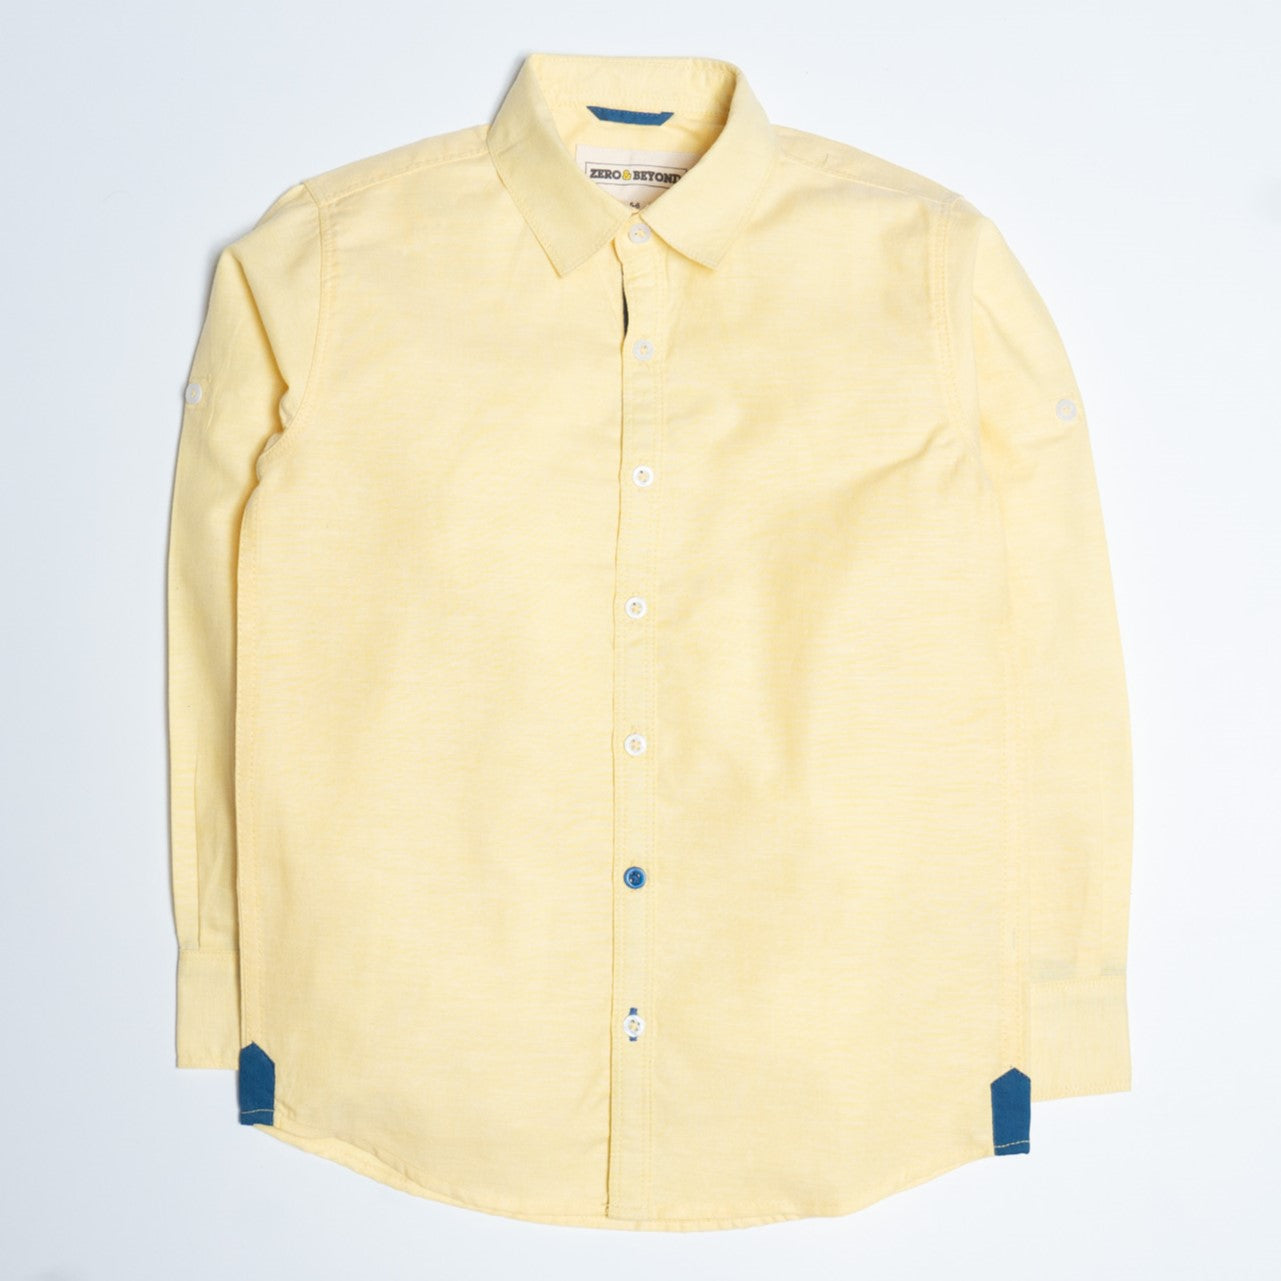 Plain Yellow Shirt